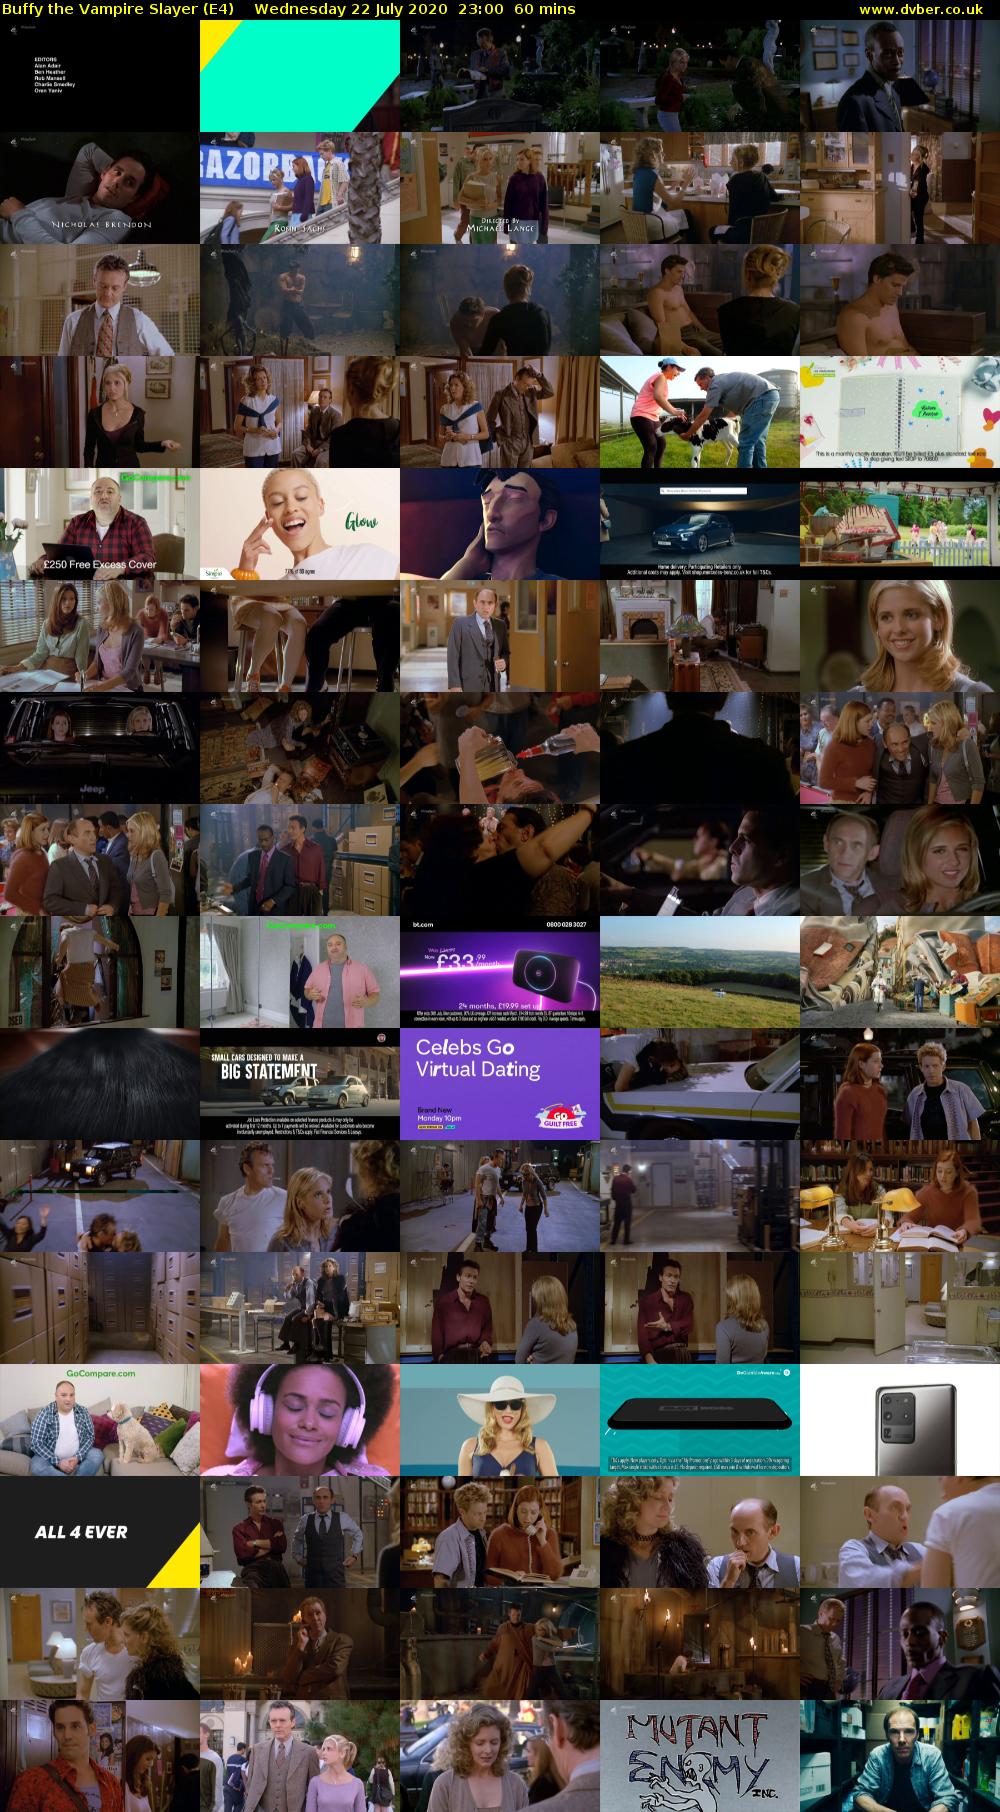 Buffy the Vampire Slayer (E4) Wednesday 22 July 2020 23:00 - 00:00